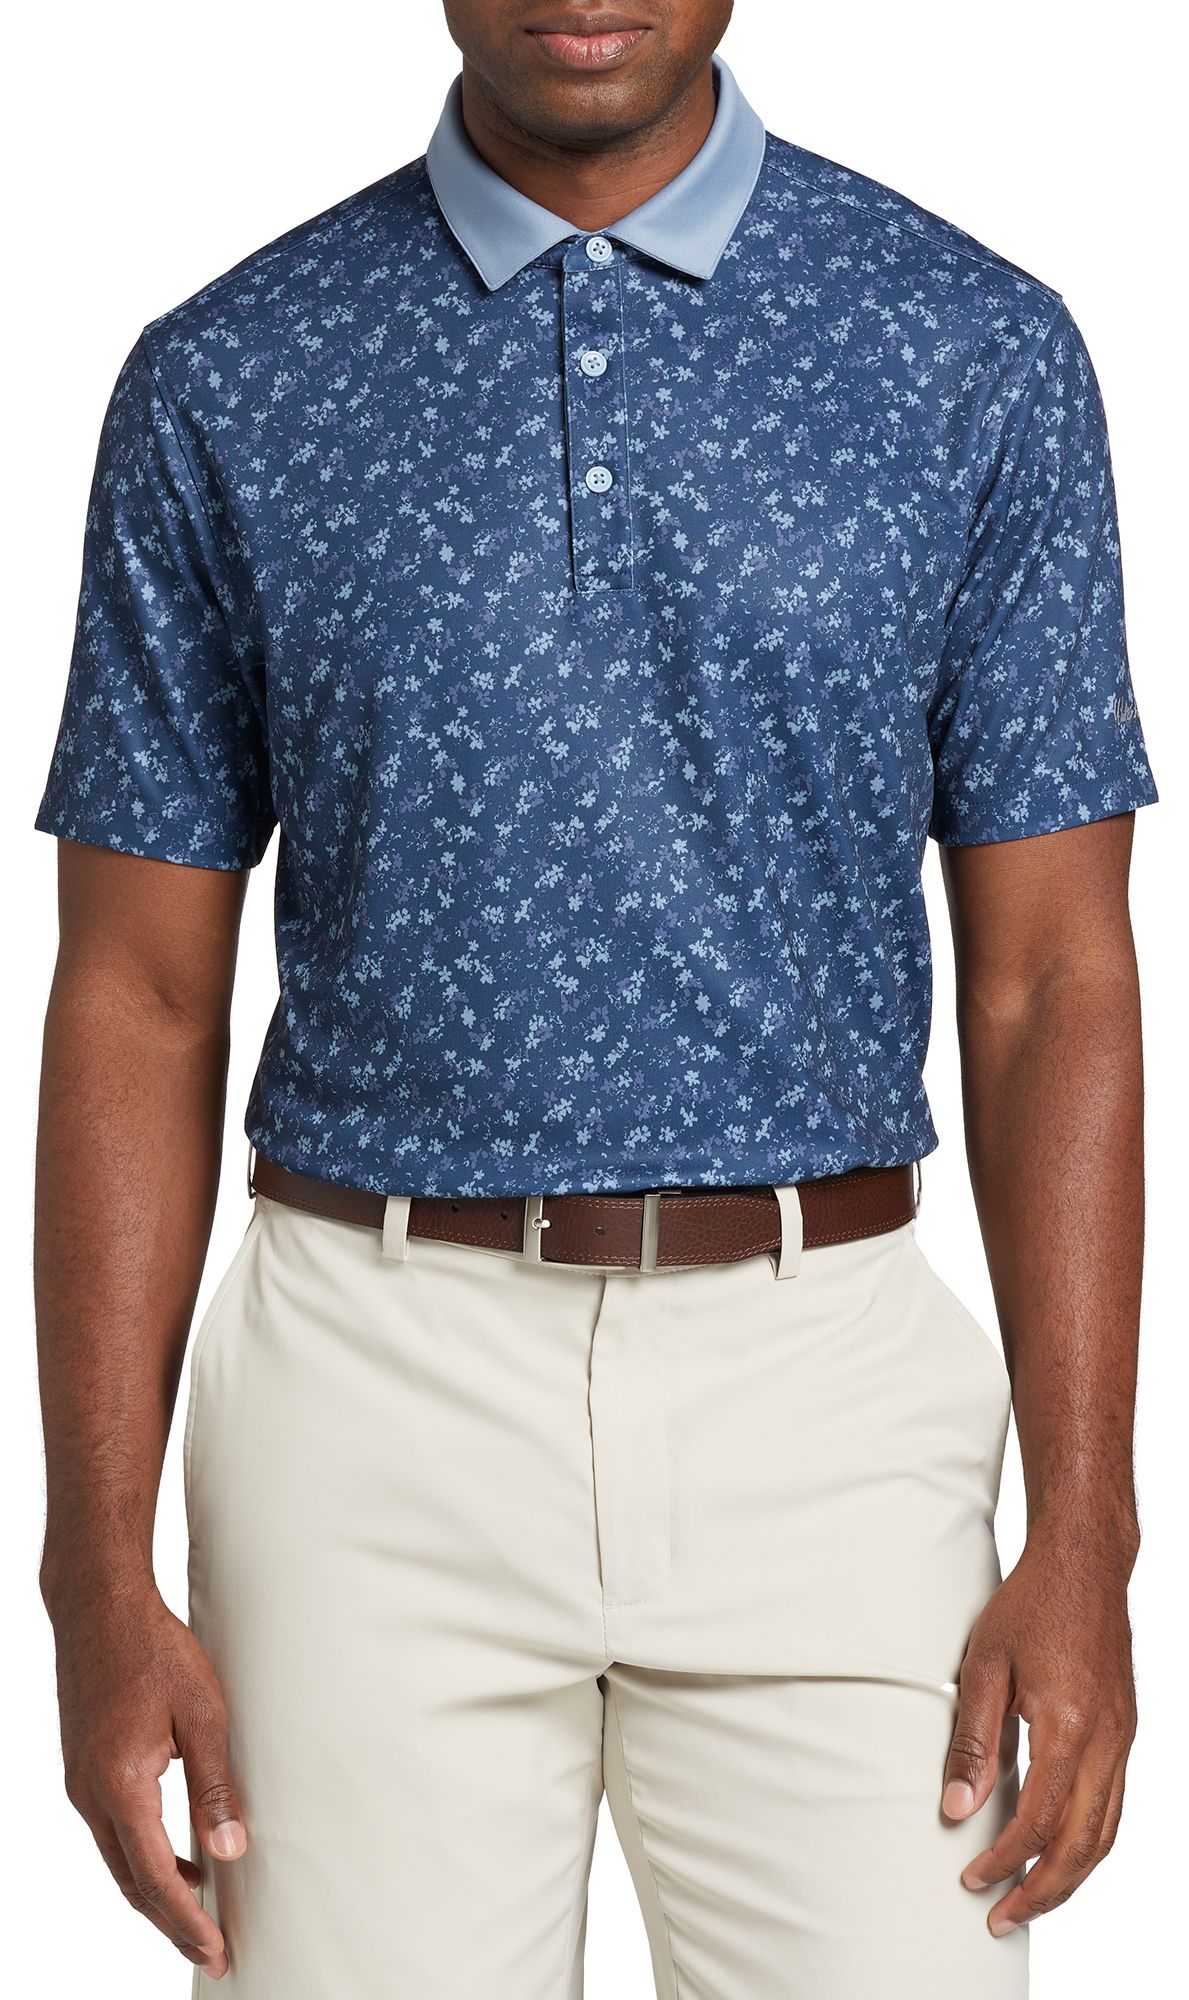 Men’s Golf Shirts & Tops